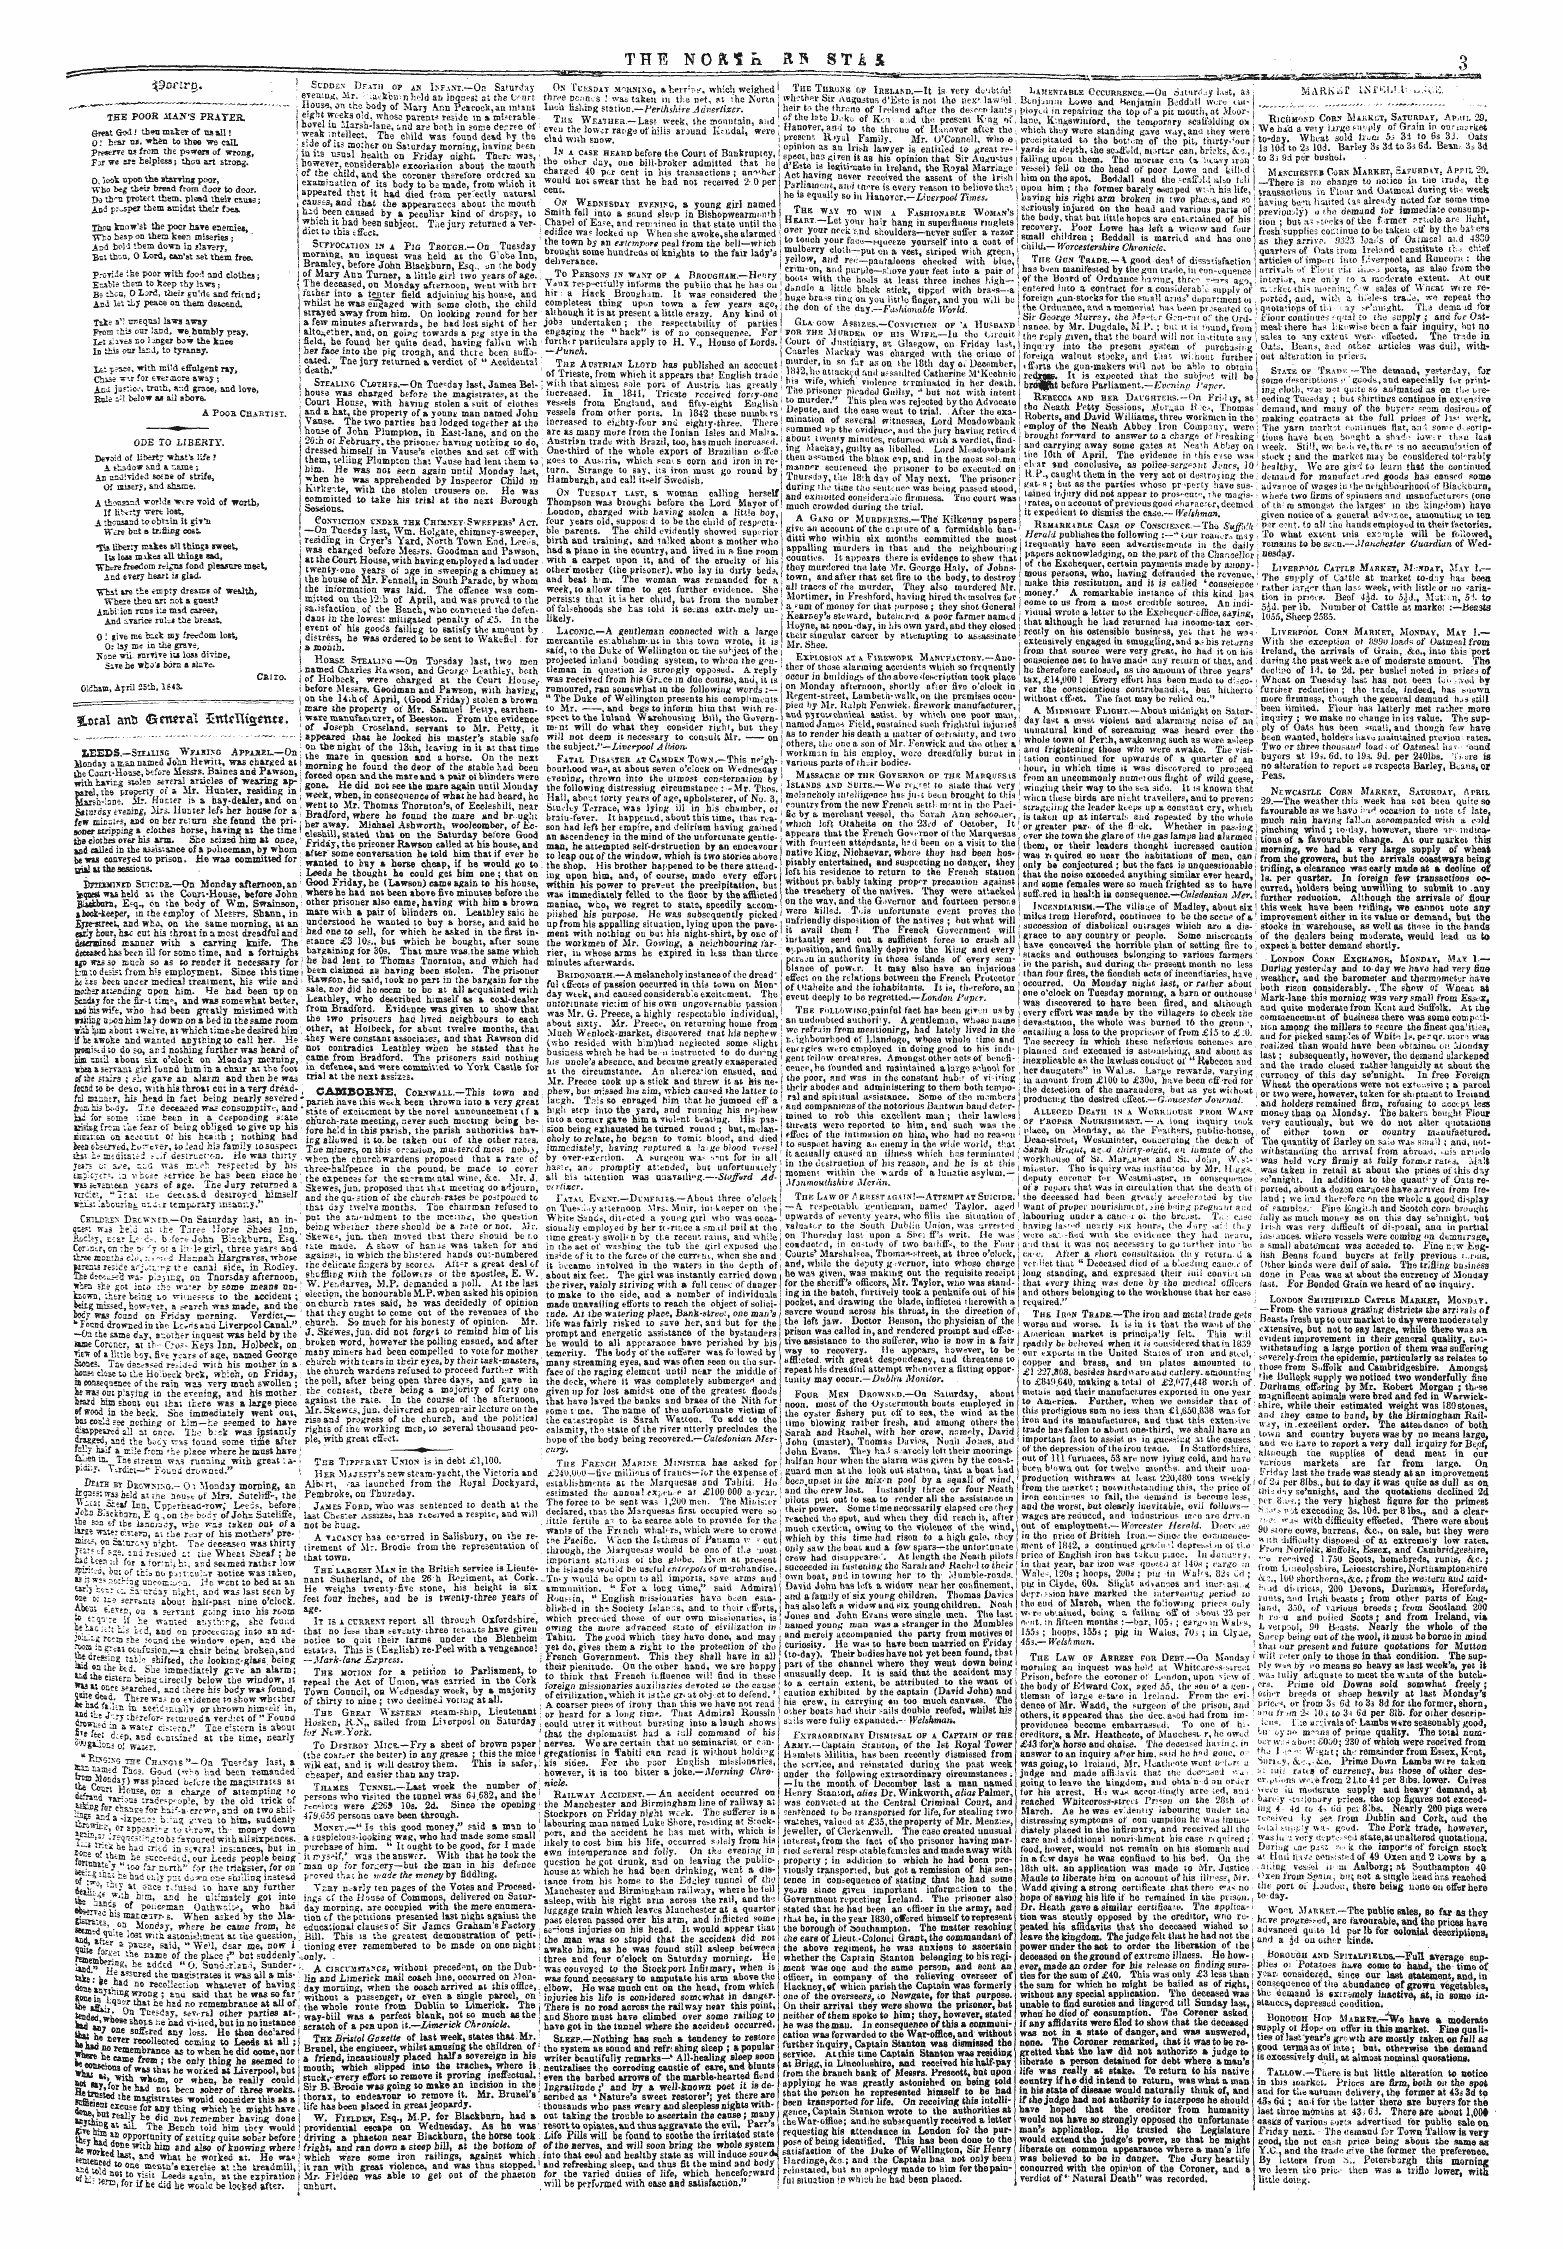 Northern Star (1837-1852): jS F Y, 2nd edition - I^Otltd.